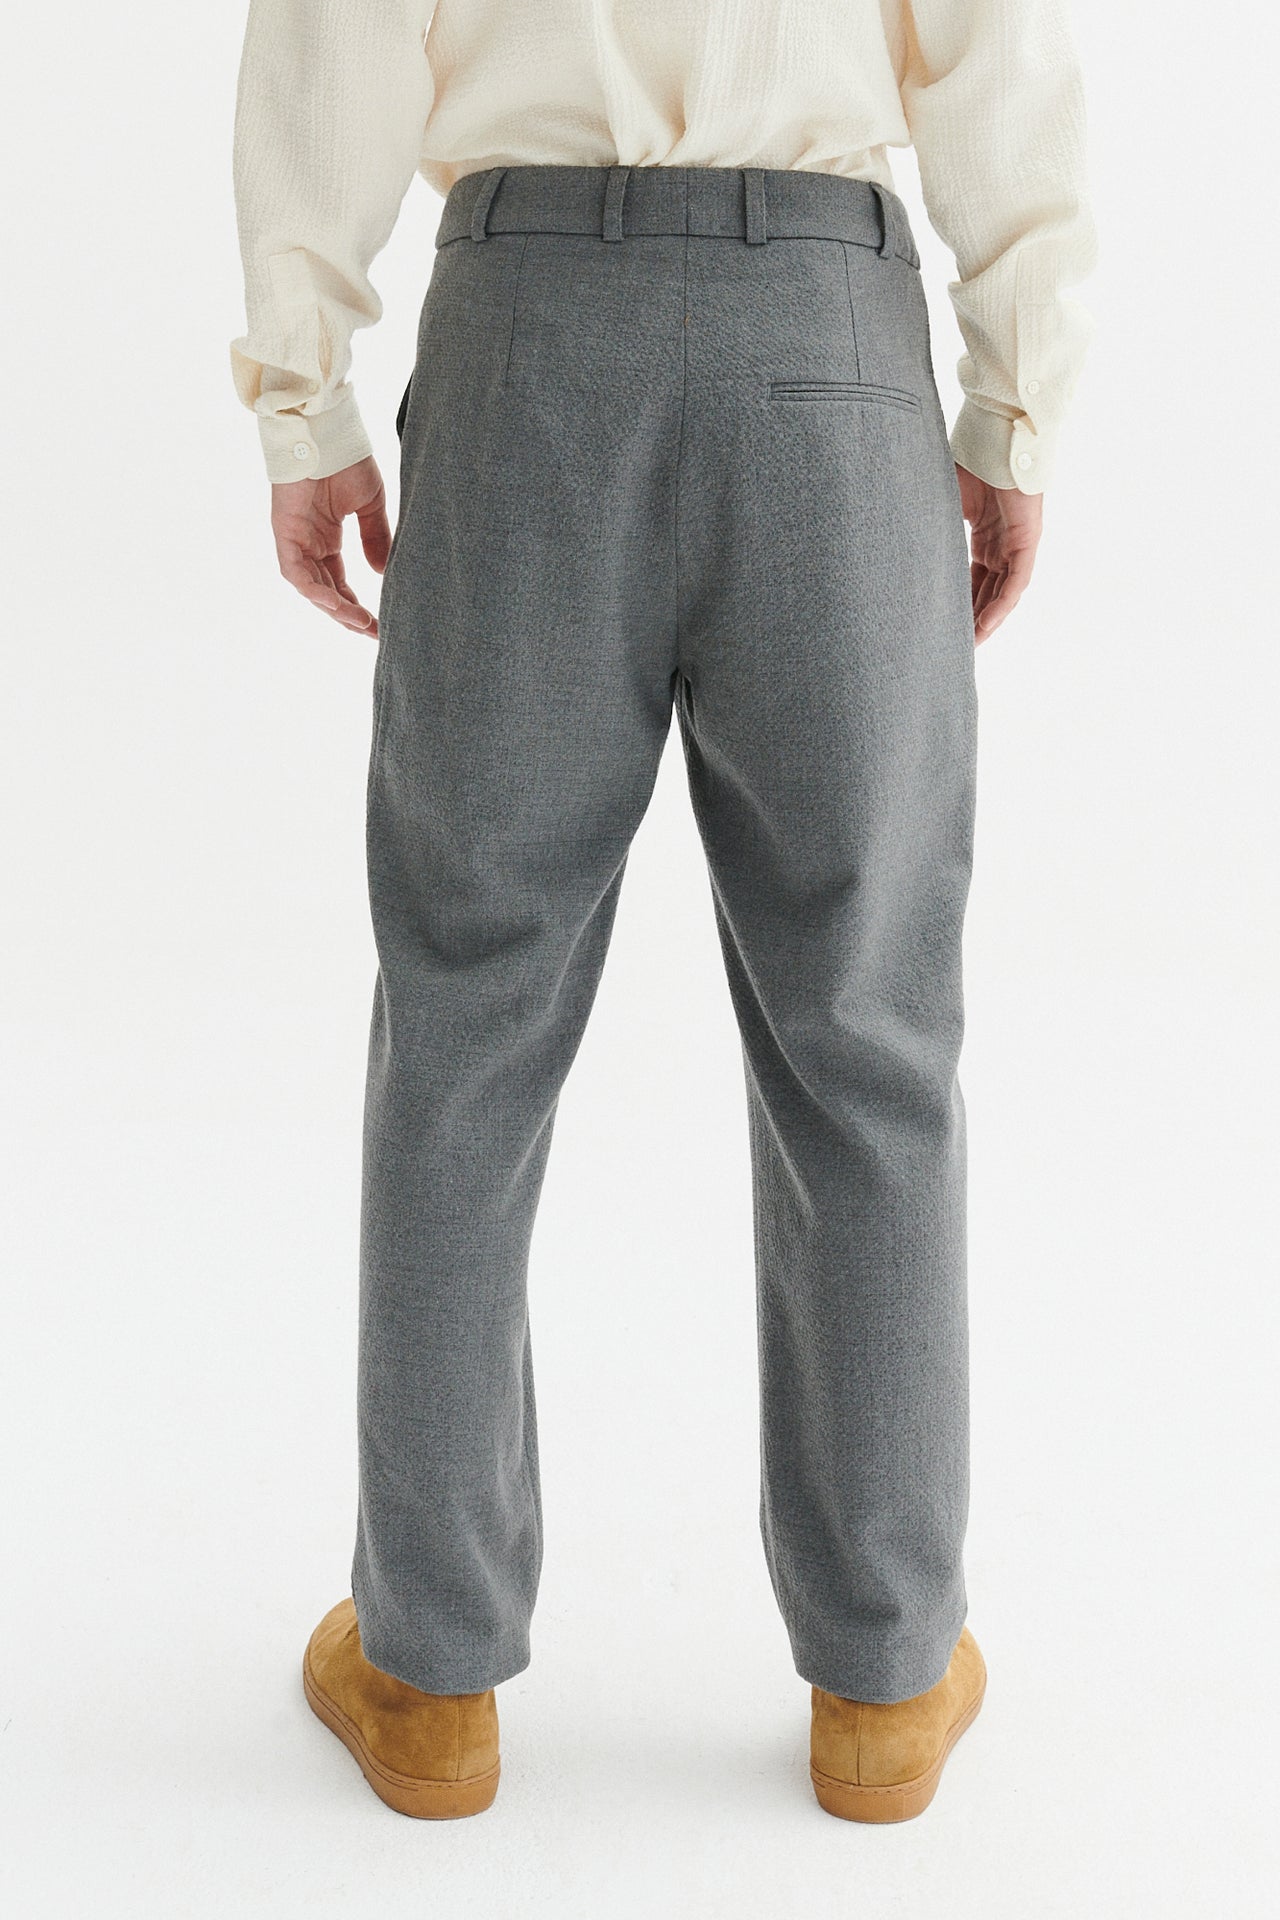 Genuine Trousers in a Grey Italian Virgin Wool and Cotton Seersucker